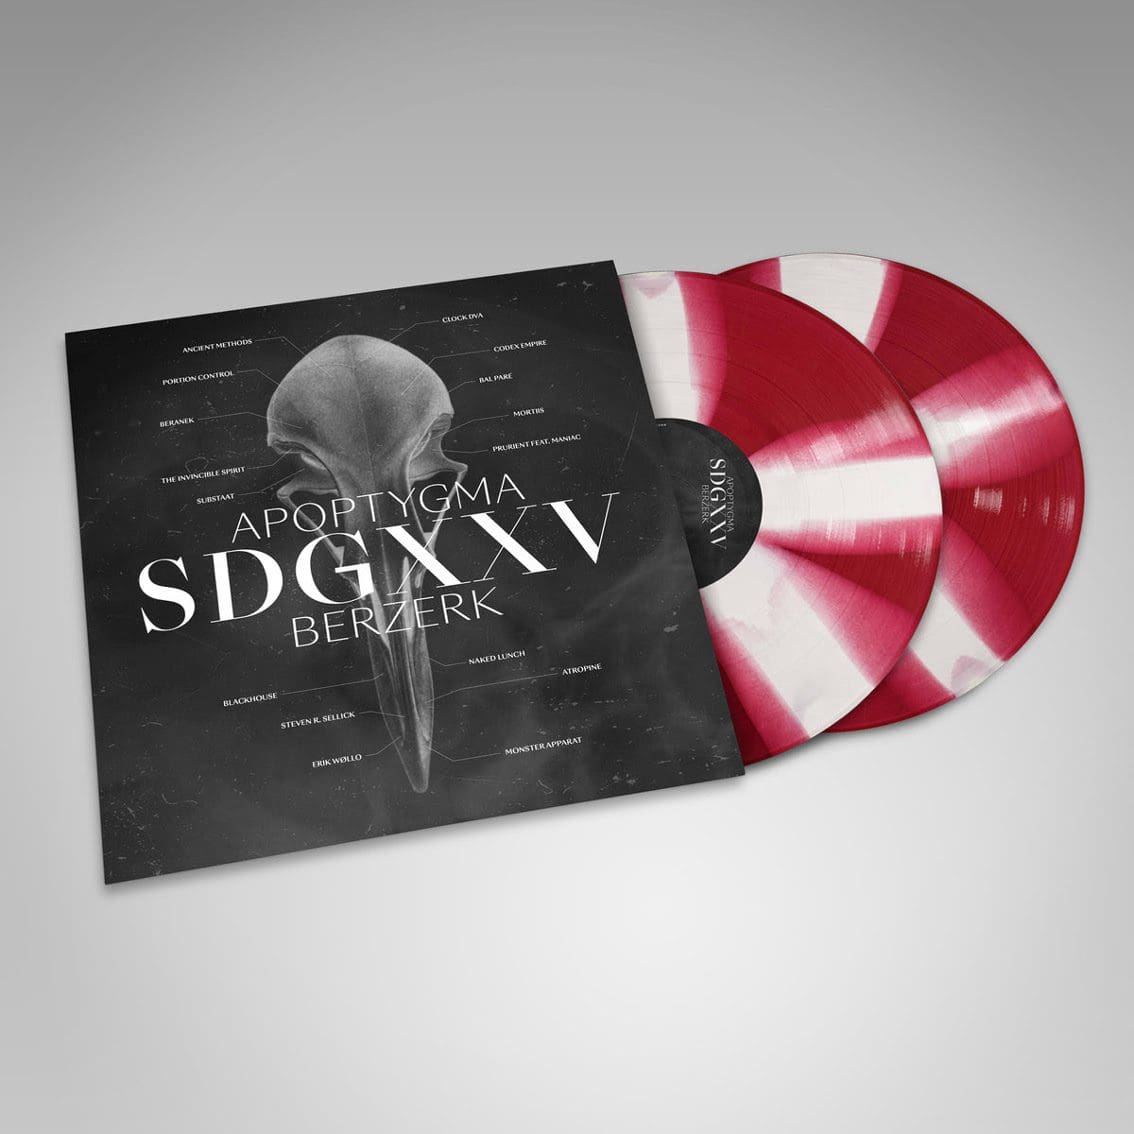 Apoptygma Berzerk re-imagine debut 'Soli Deo Gloria' on 'SDGXXV' - pre-orders available now